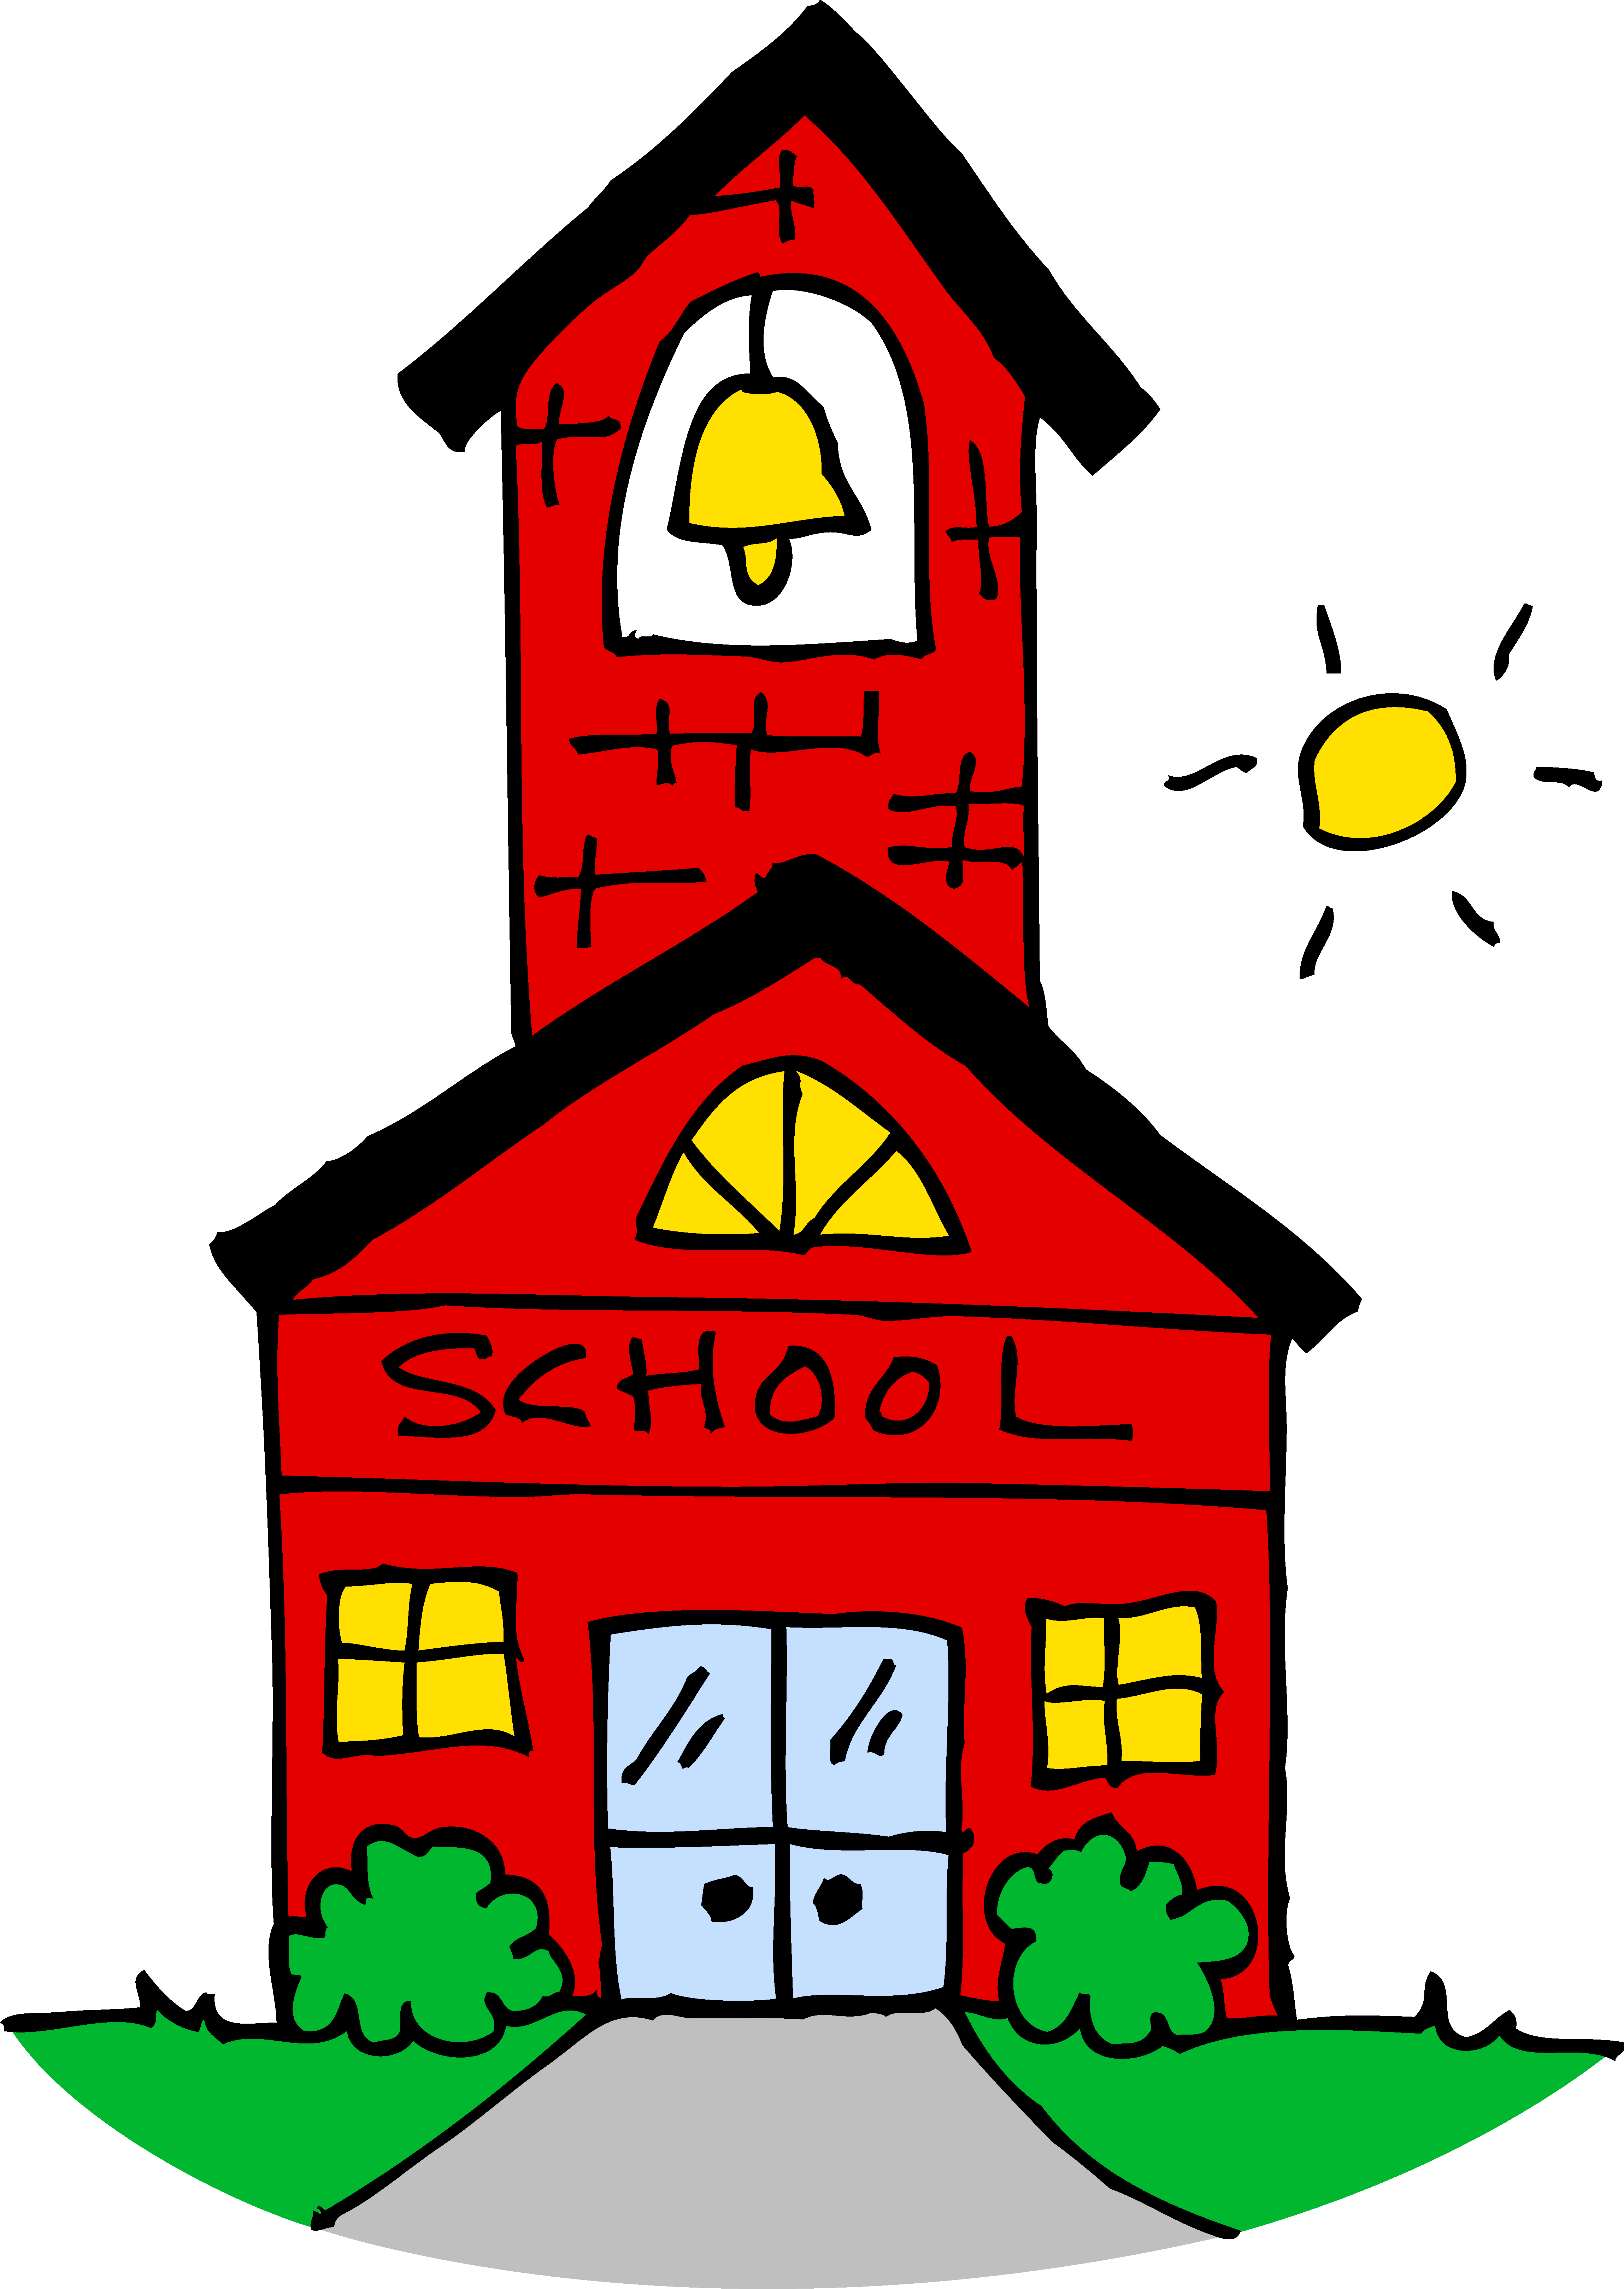 School house clip art